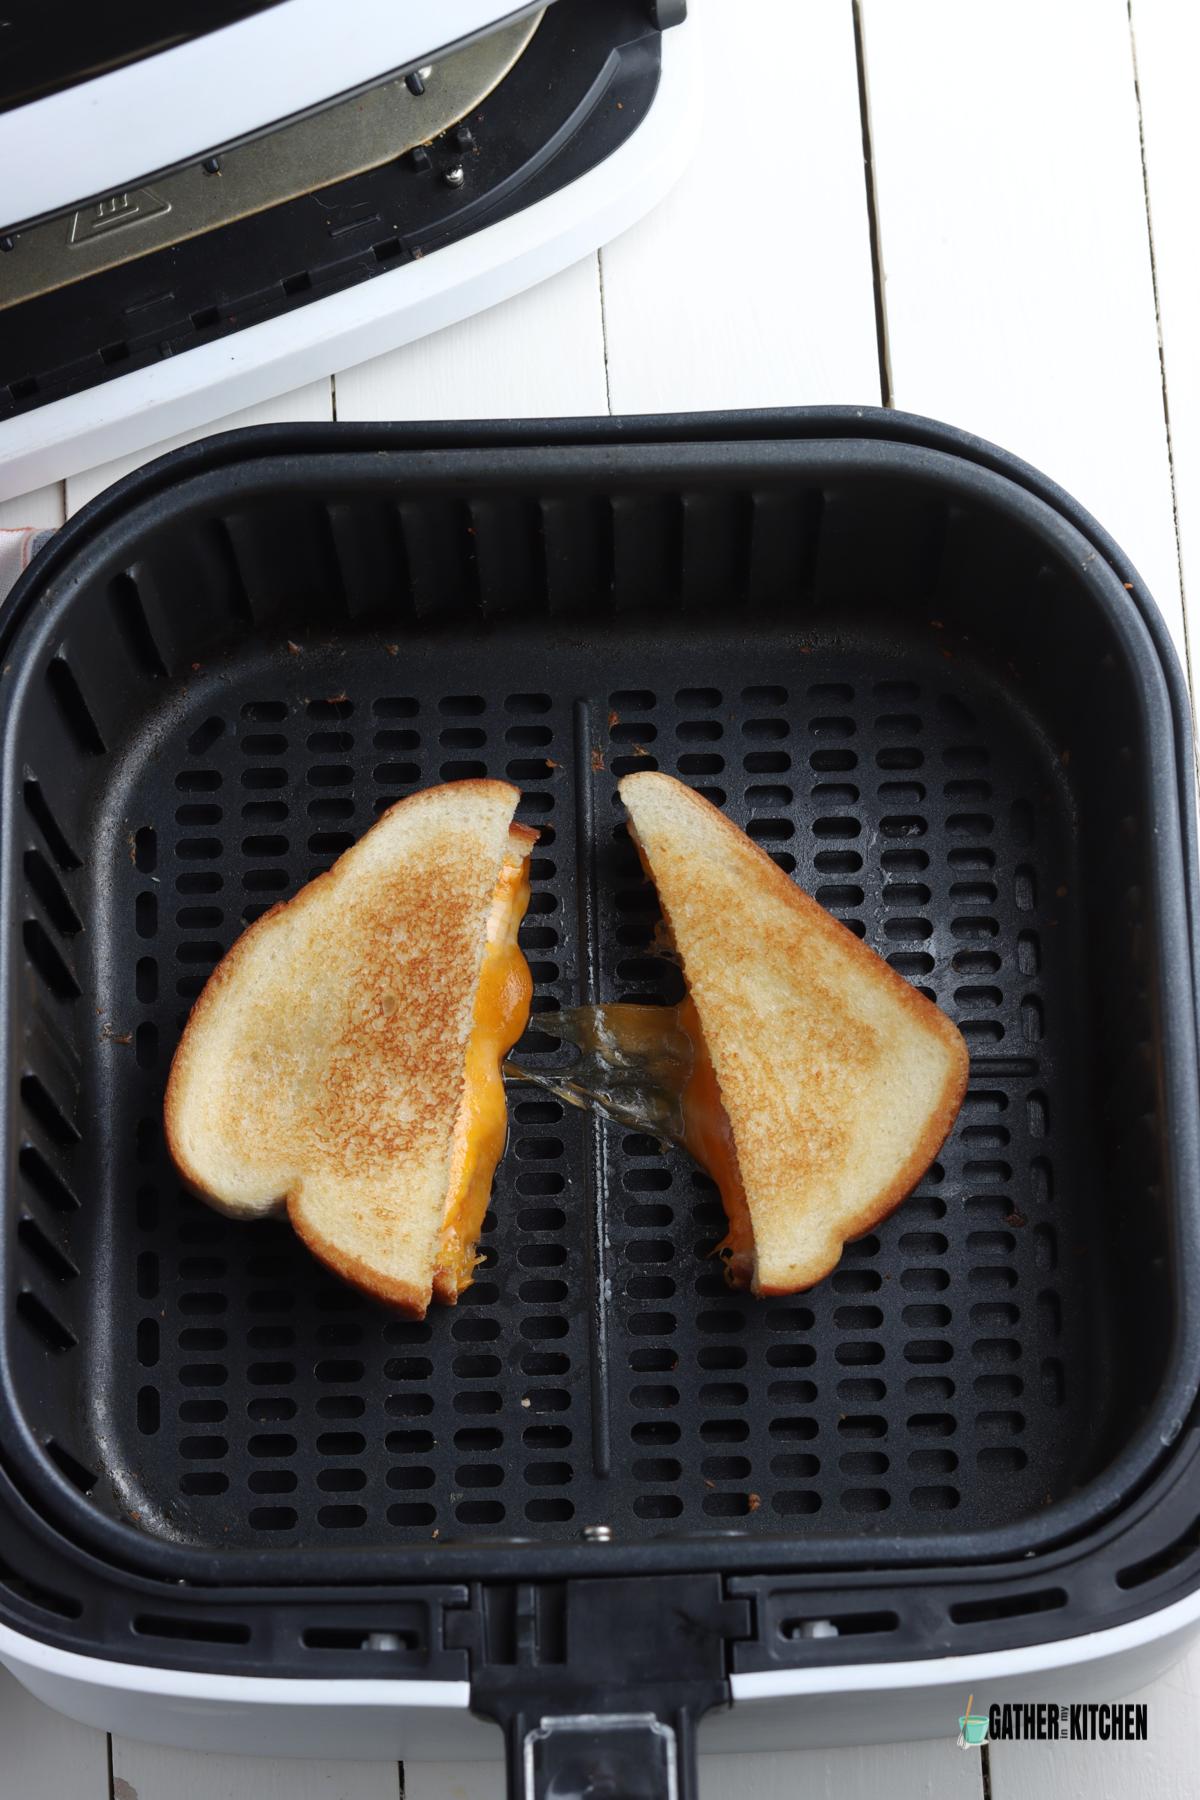 Grilled cheese sandwich cut in half in air fryer basket.